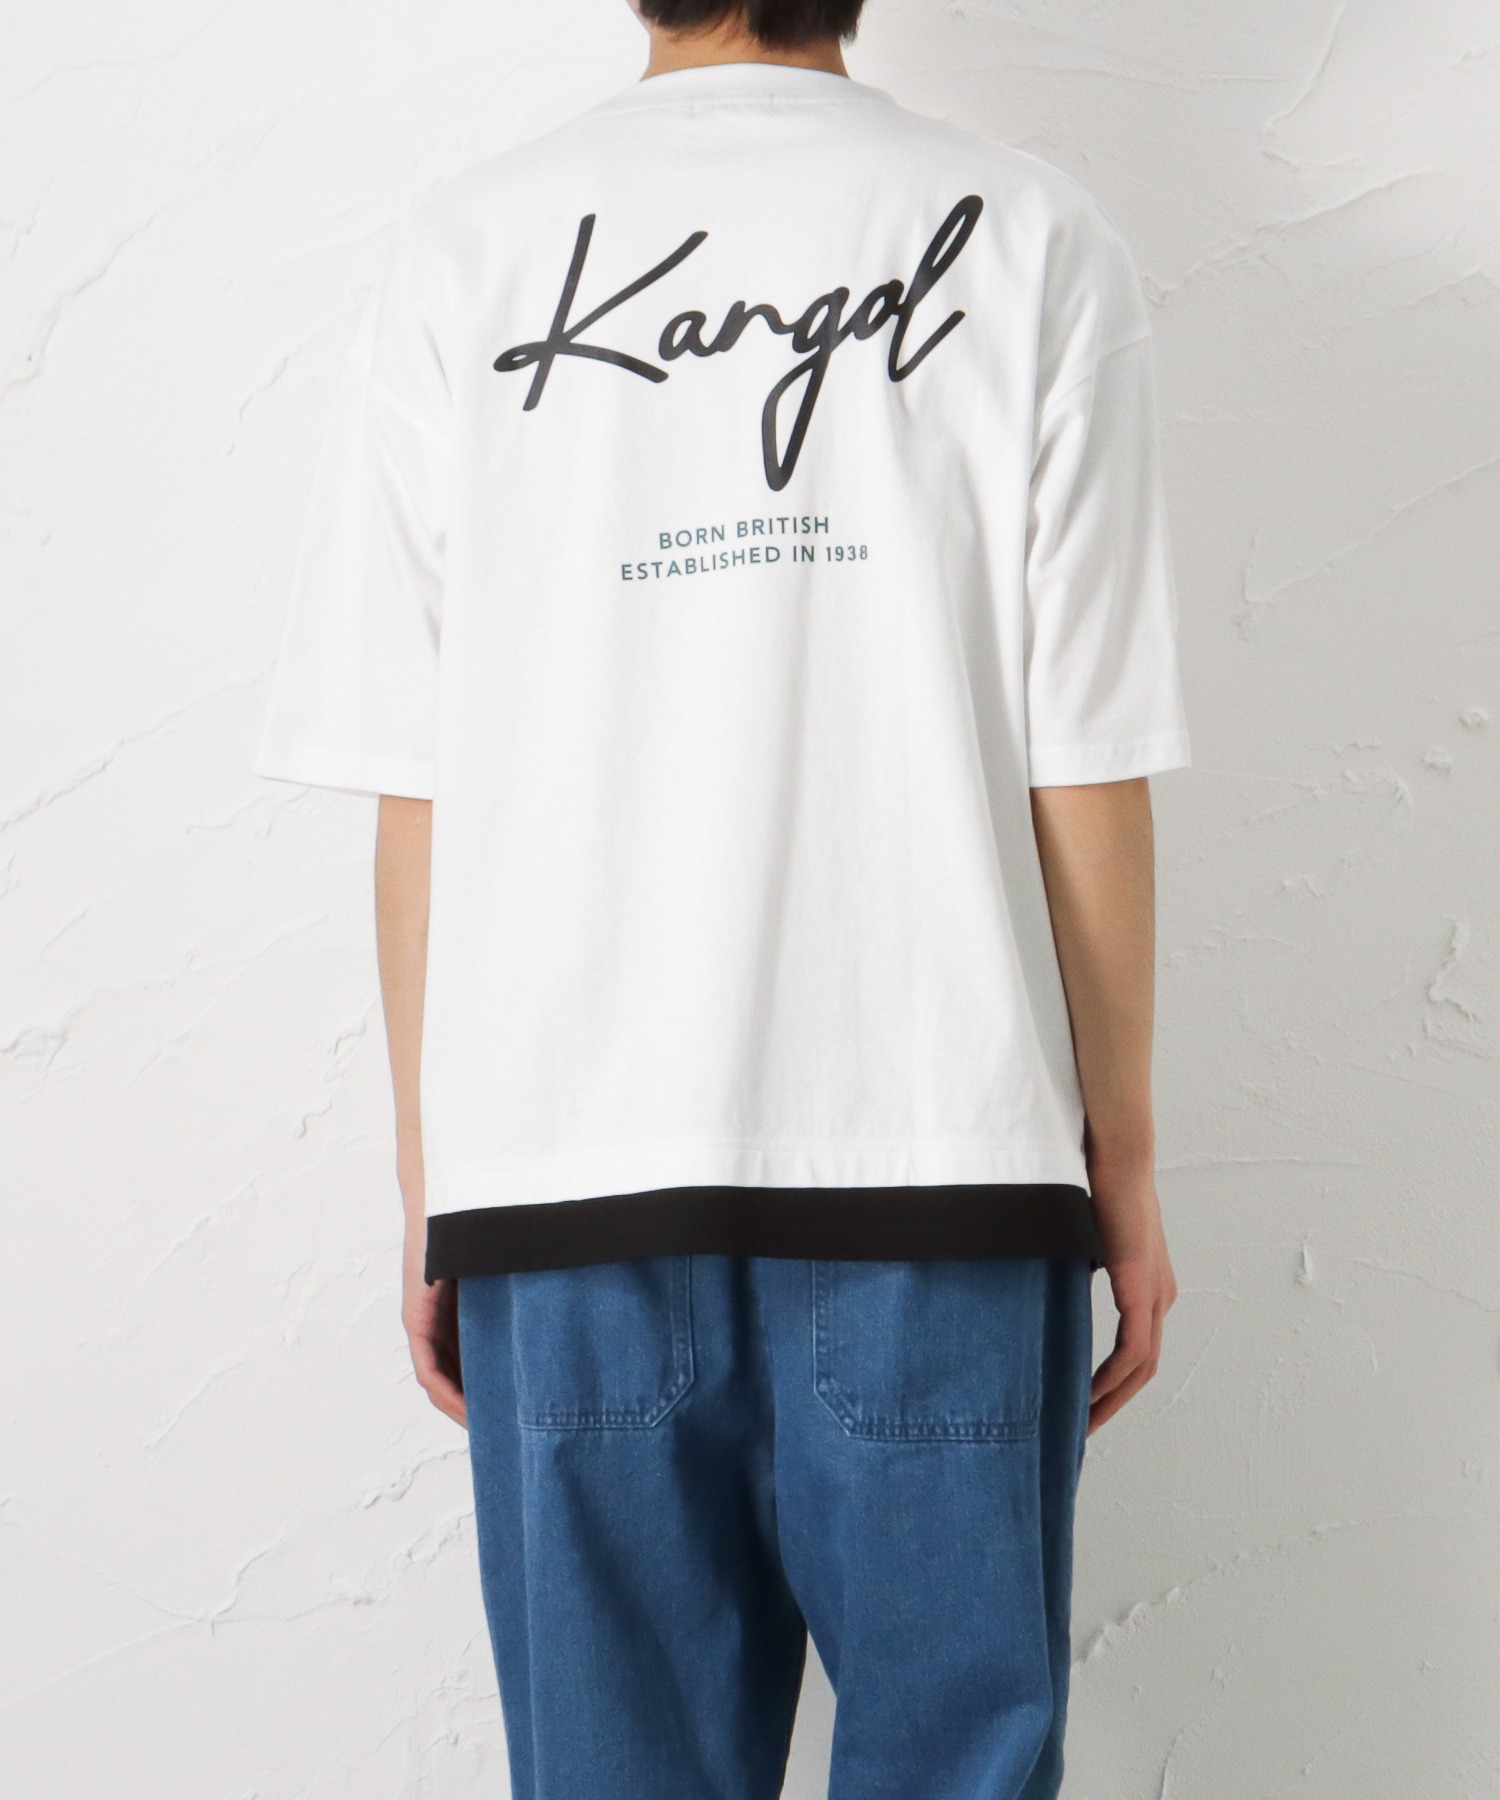 KANGOLKANGOL カンゴール ビッグシルエット 筆記体ロゴ 気質アップ フェイクレイヤード 2021新作モデル 半袖Tシャツ